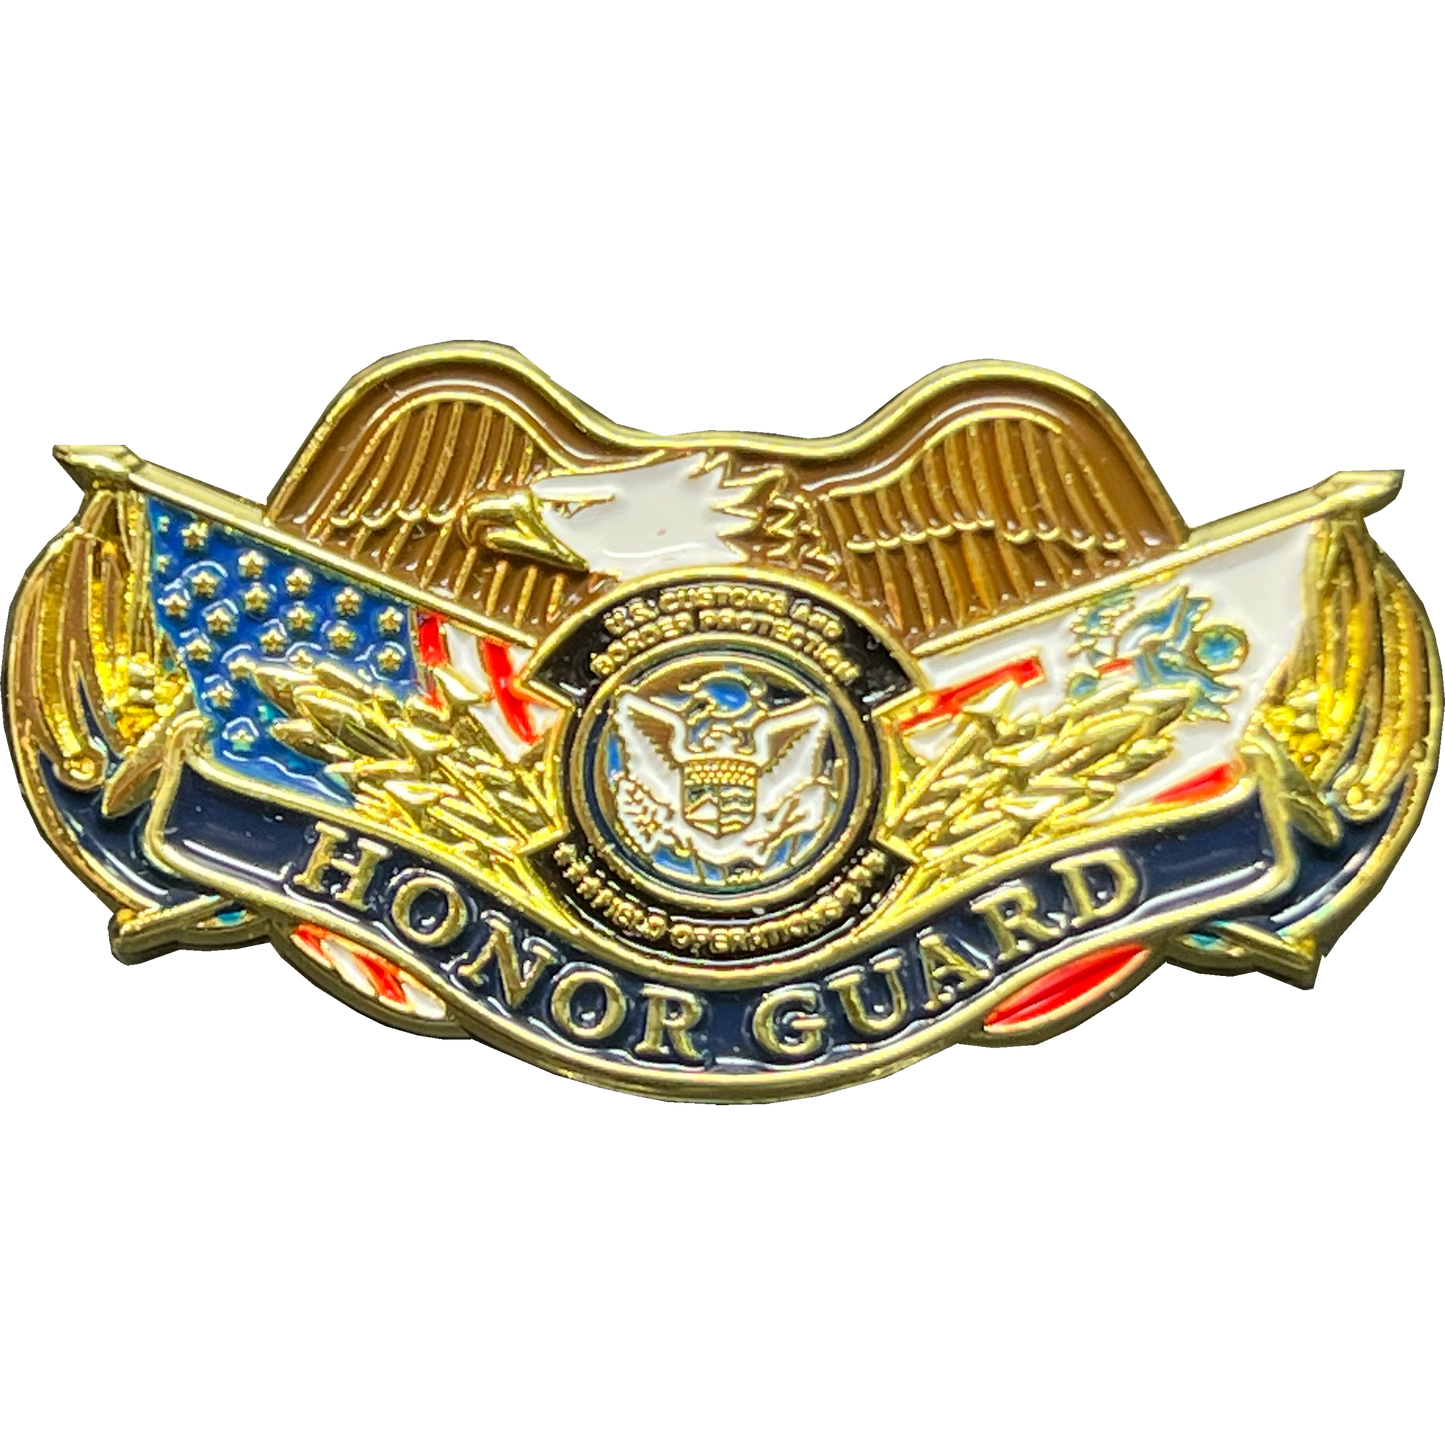 GL4-017 CBP Officer Field Operations Honor Guard off duty lapel pin non-uniform wear